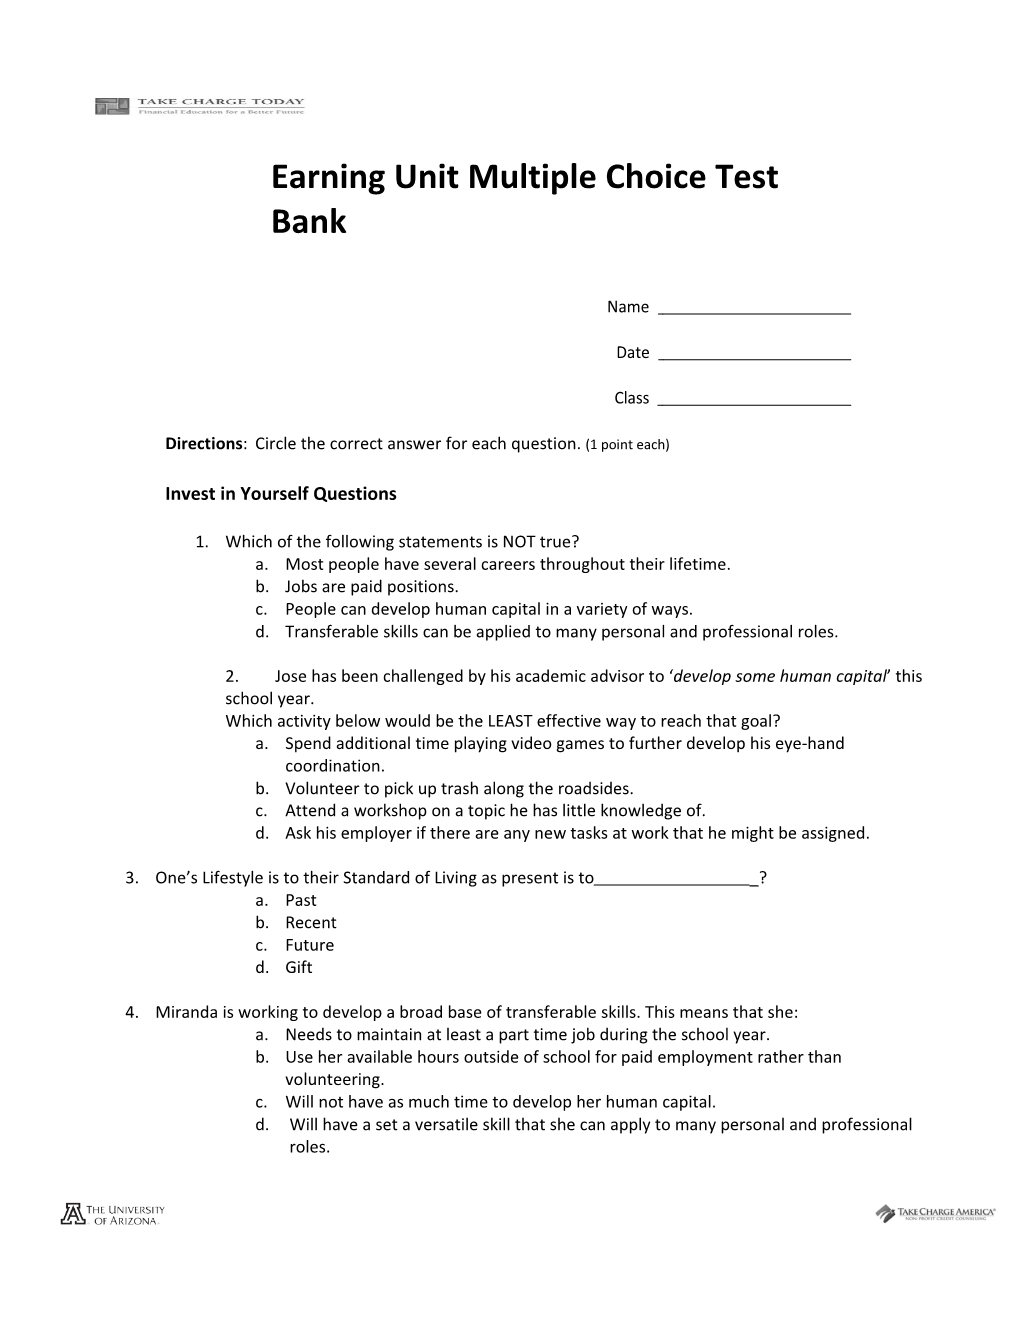 Earning Unit Multiple Choice Test Bank 2.3.0.M1